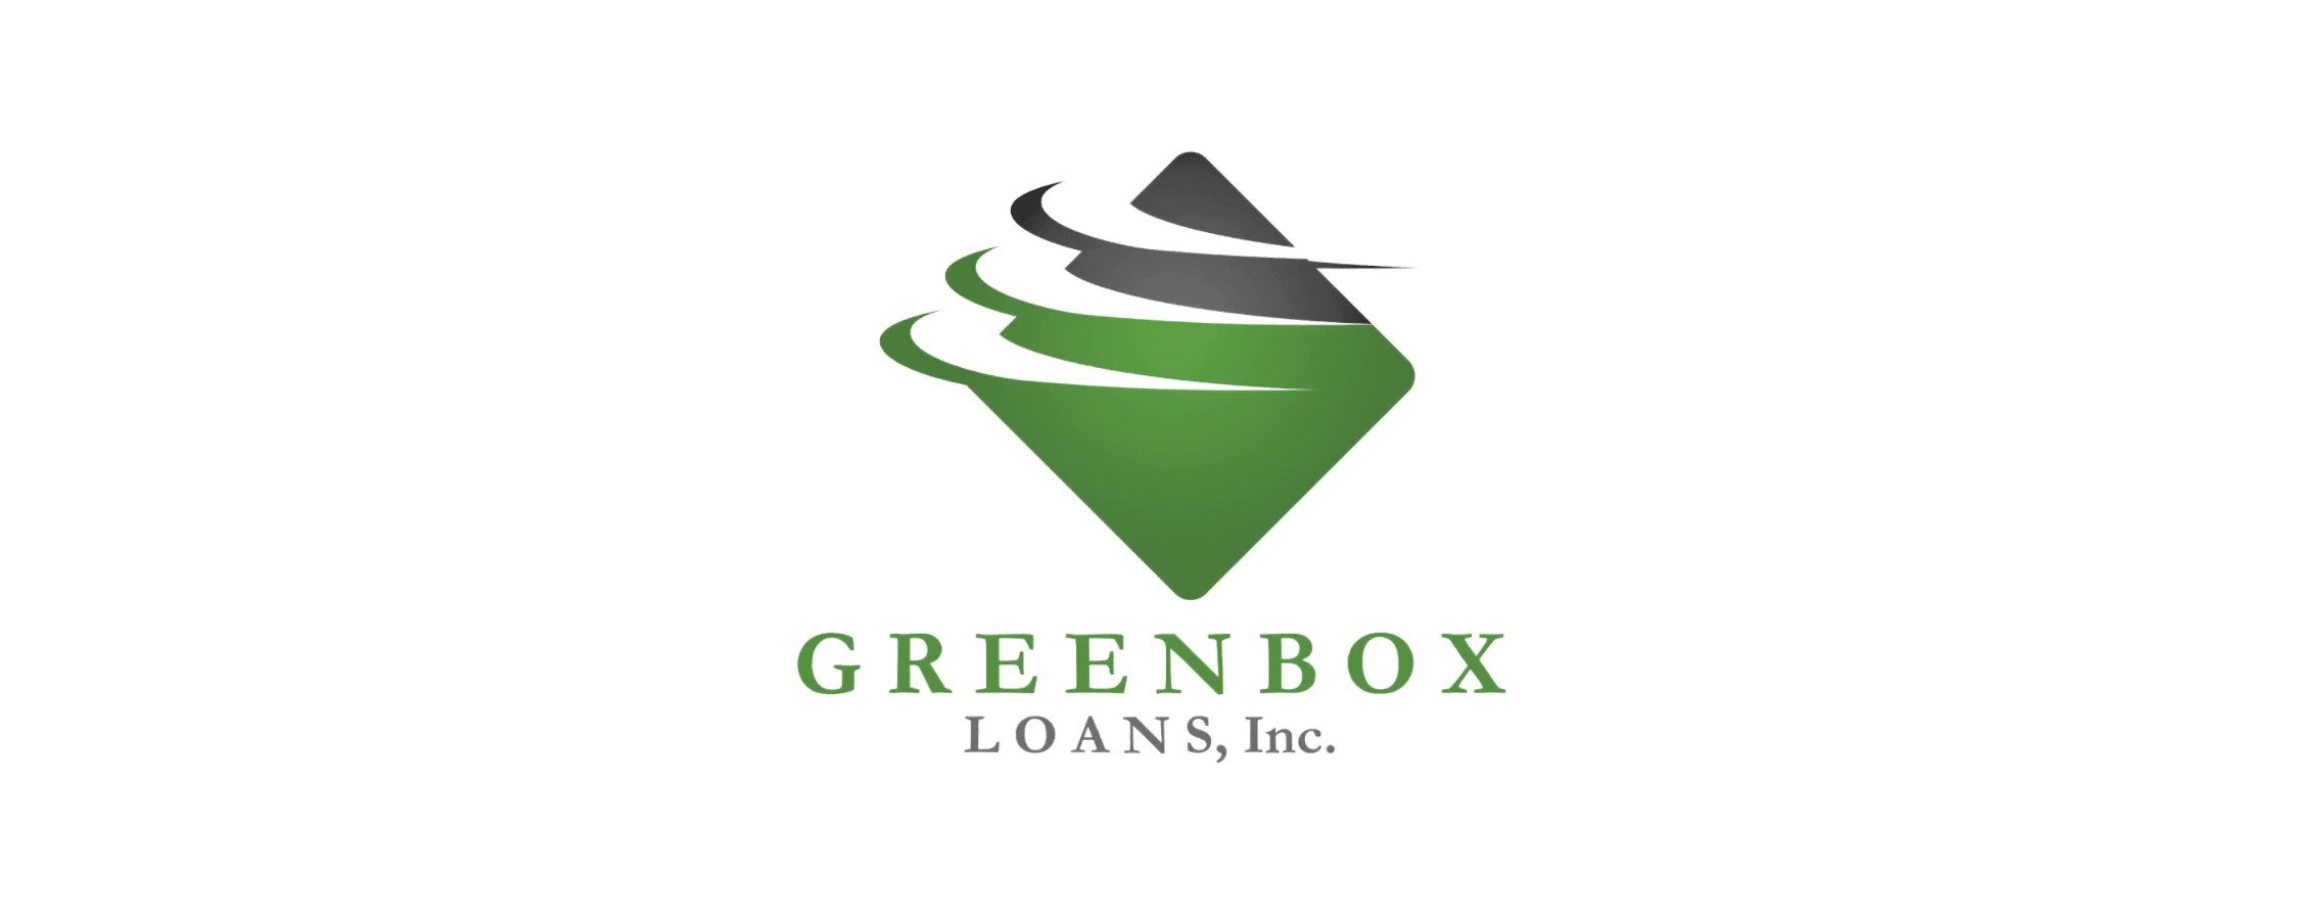 GreenBox Loans, Inc.